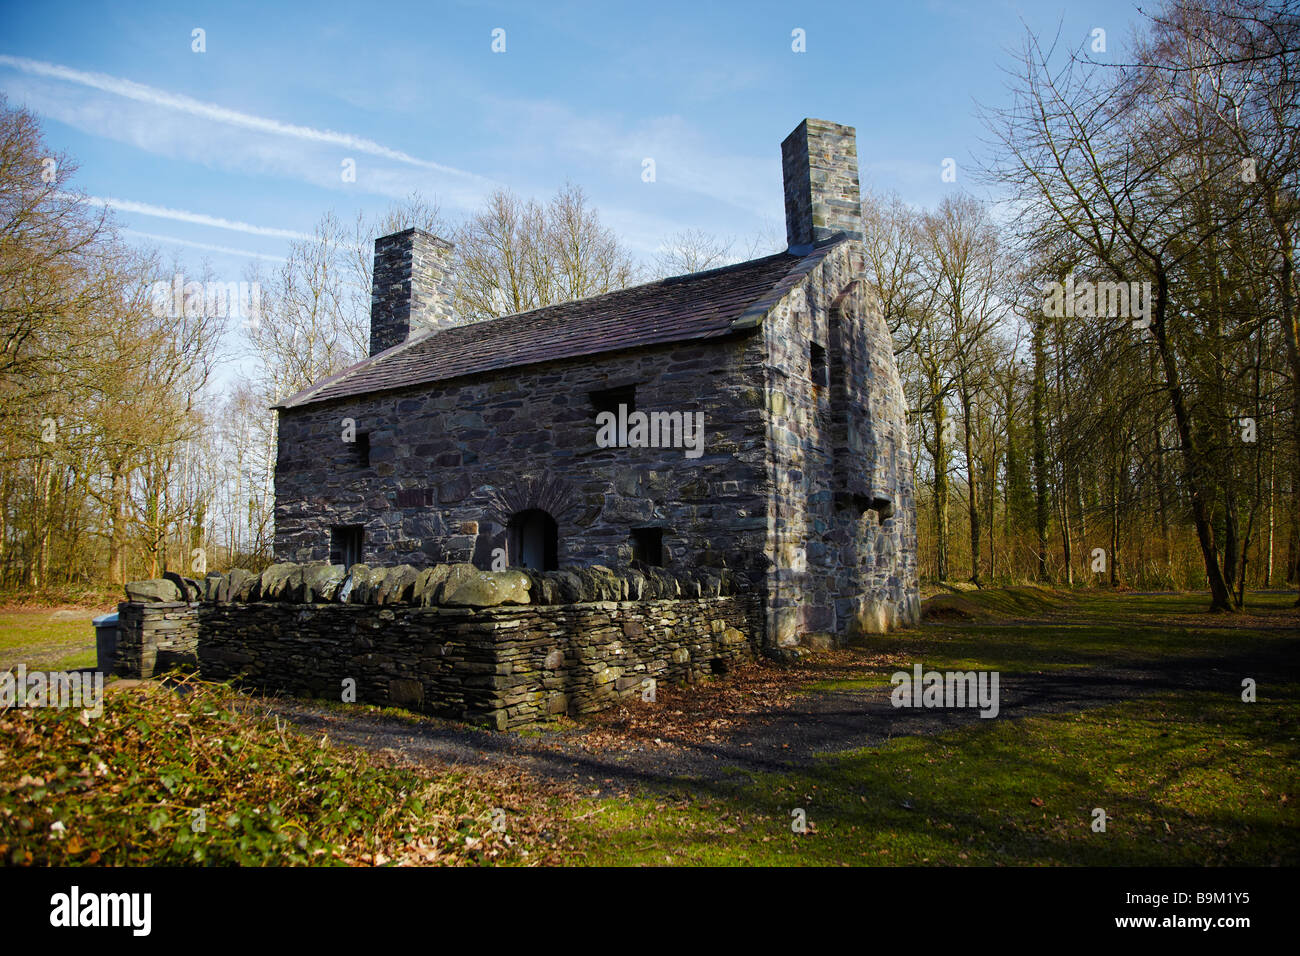 Y Garreg Fawr, North Wales Slate Cottage, St Fagans National History Museum, St Fagans, Wales, UK Stock Photo